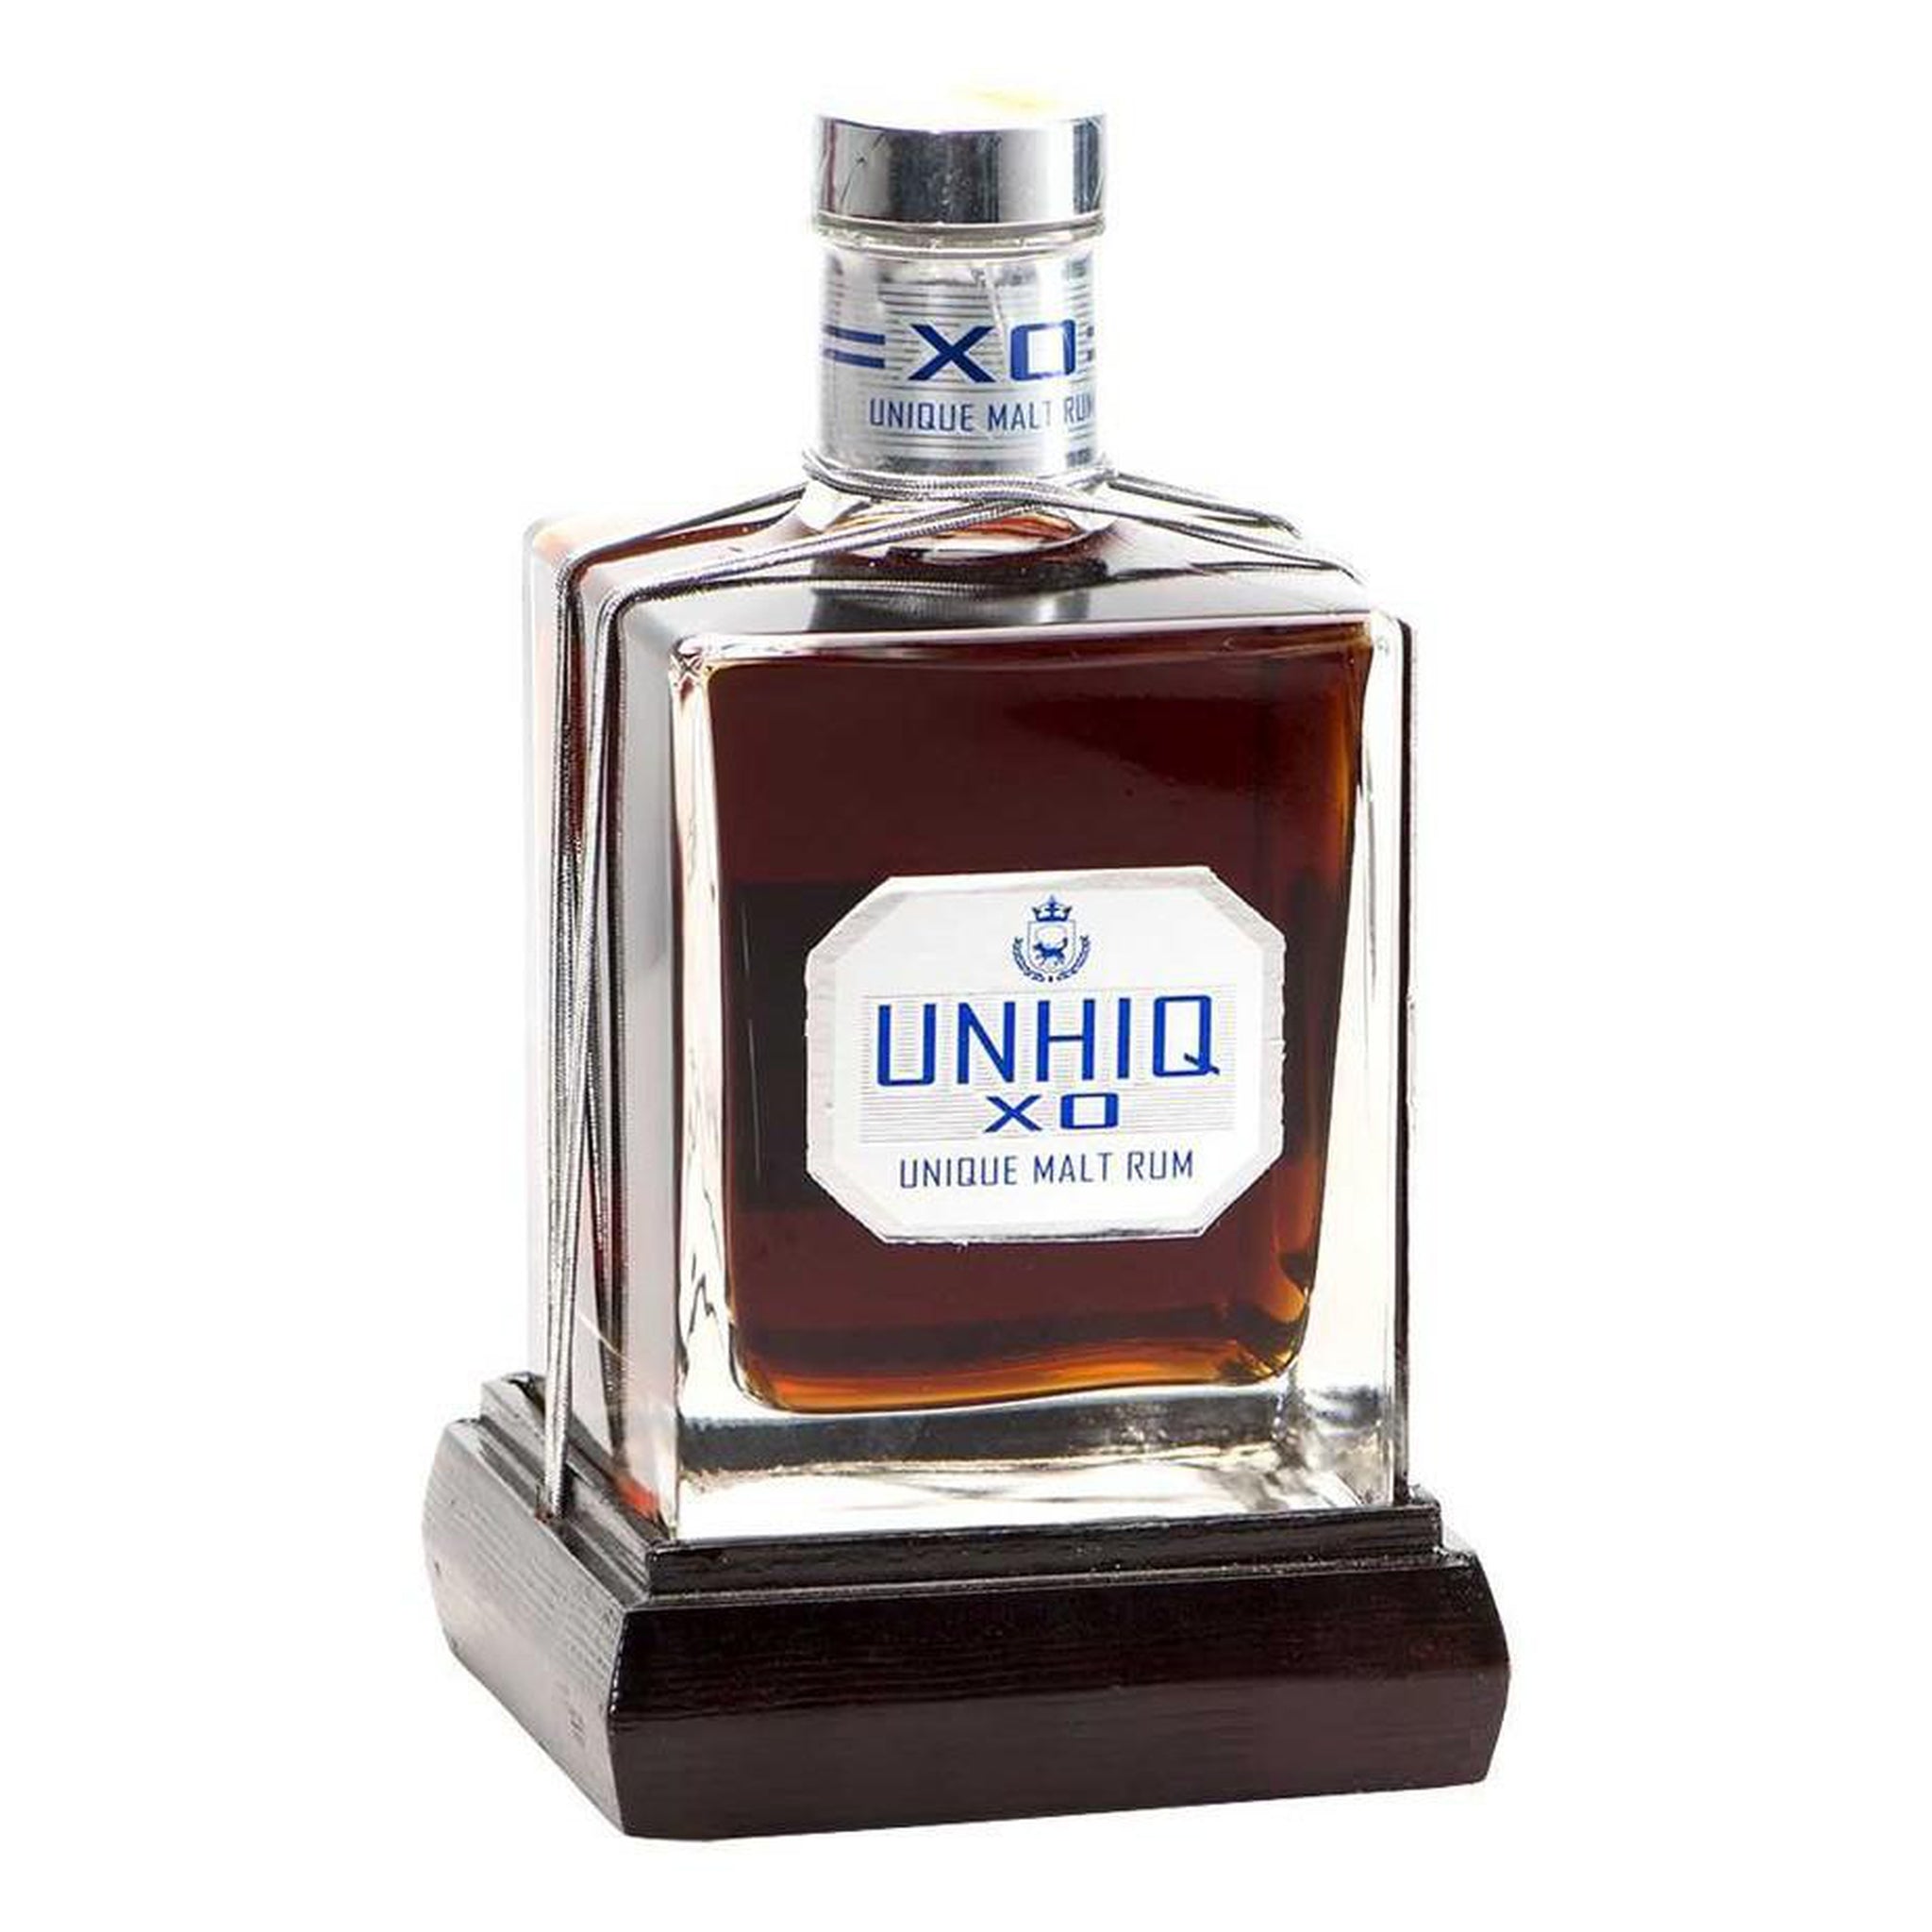 Unhiq XO Malt Rum (50 cl.)